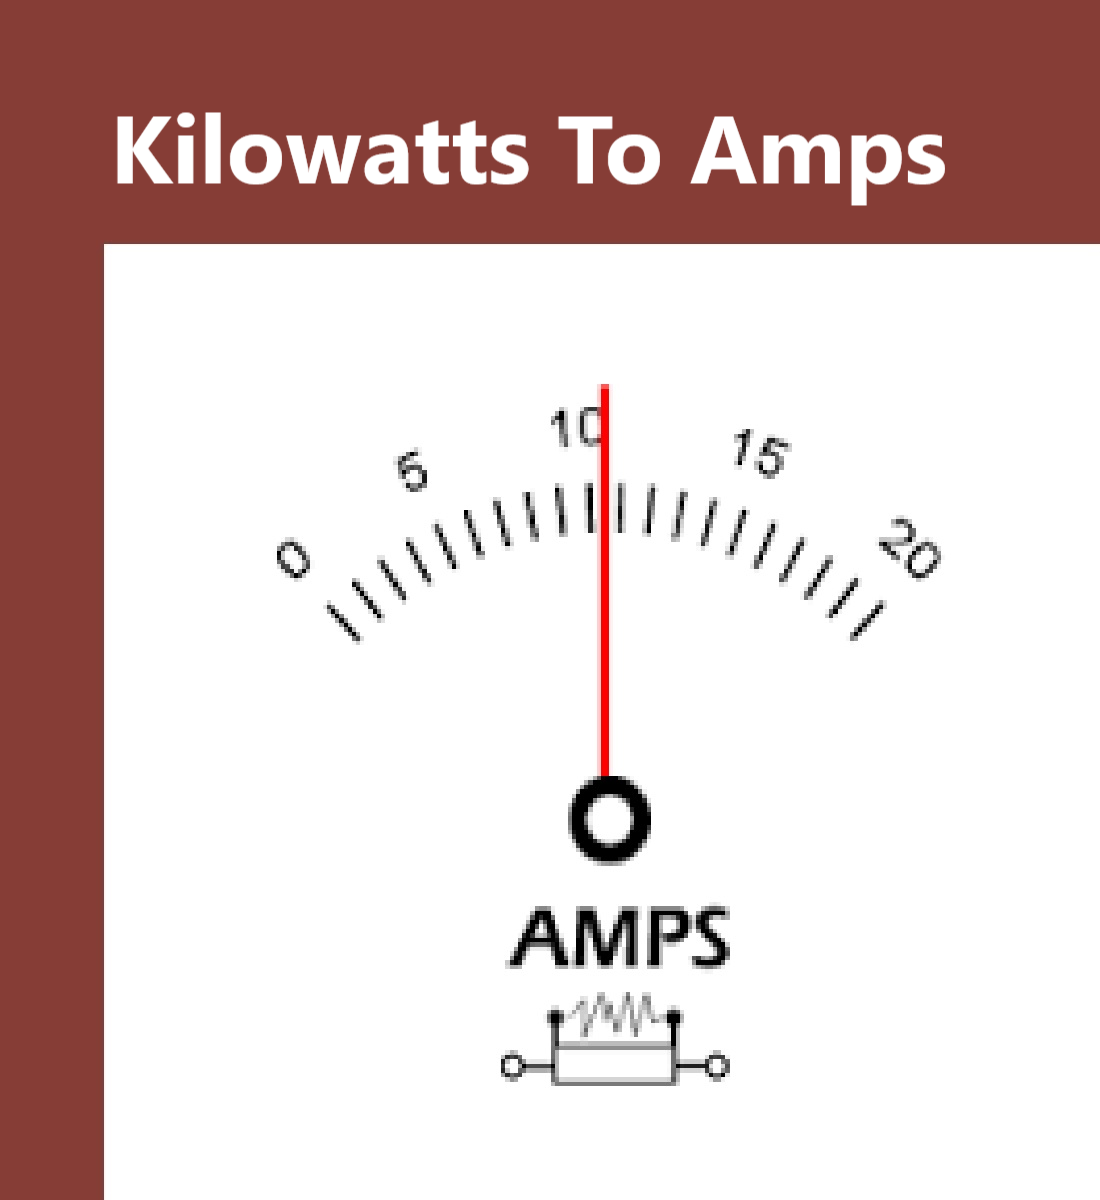 Kilowatts to Amps